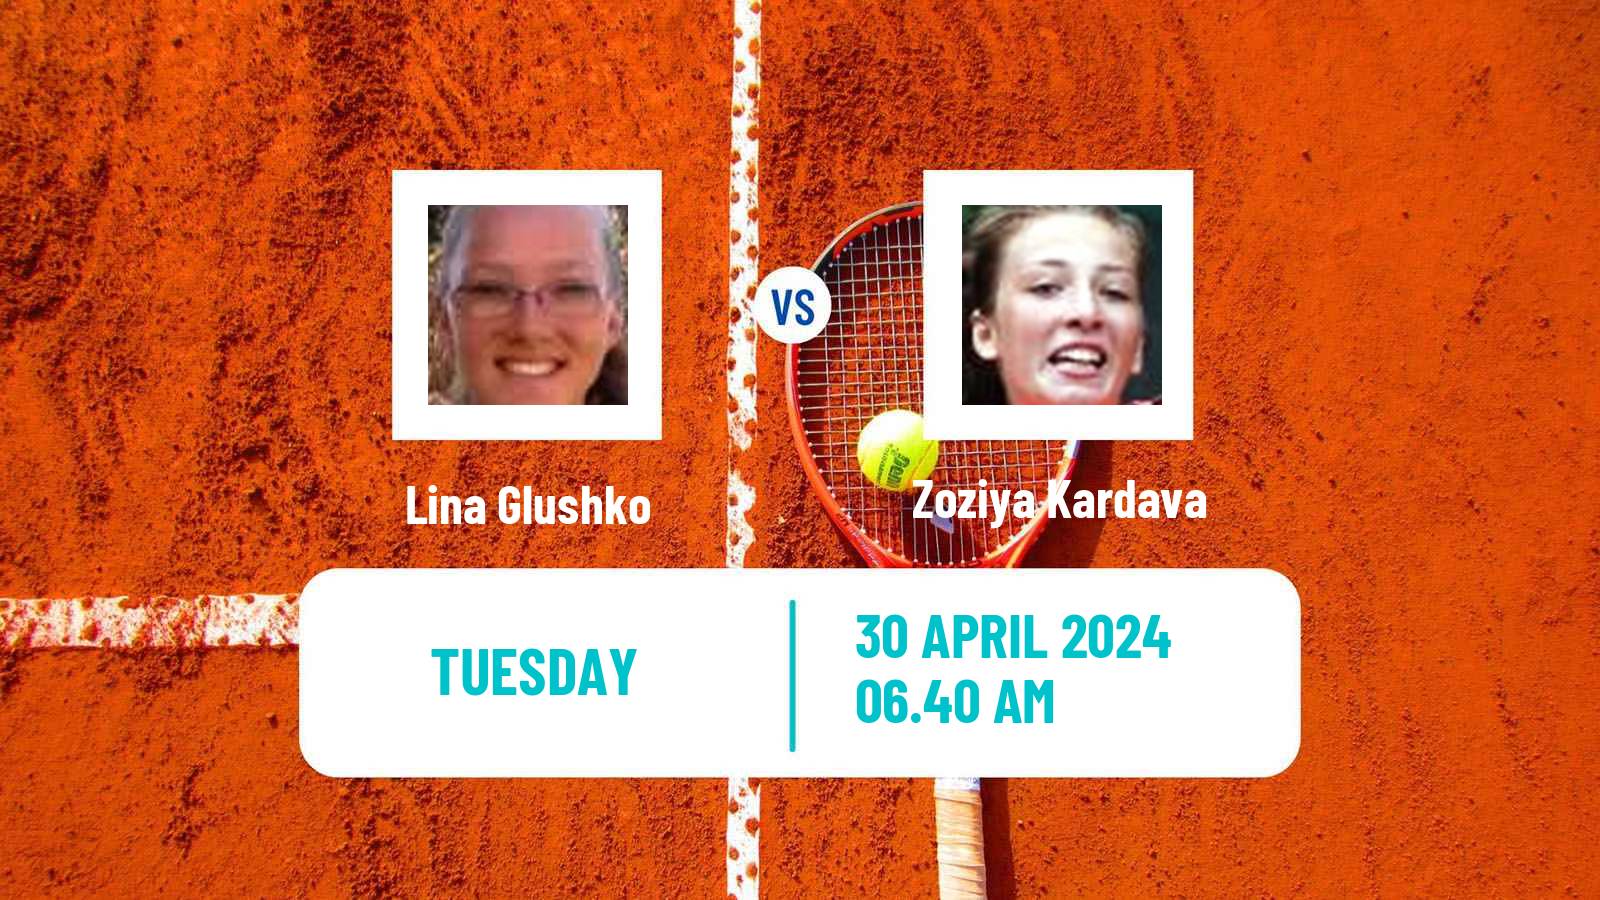 Tennis ITF W50 Lopota 2 Women Lina Glushko - Zoziya Kardava